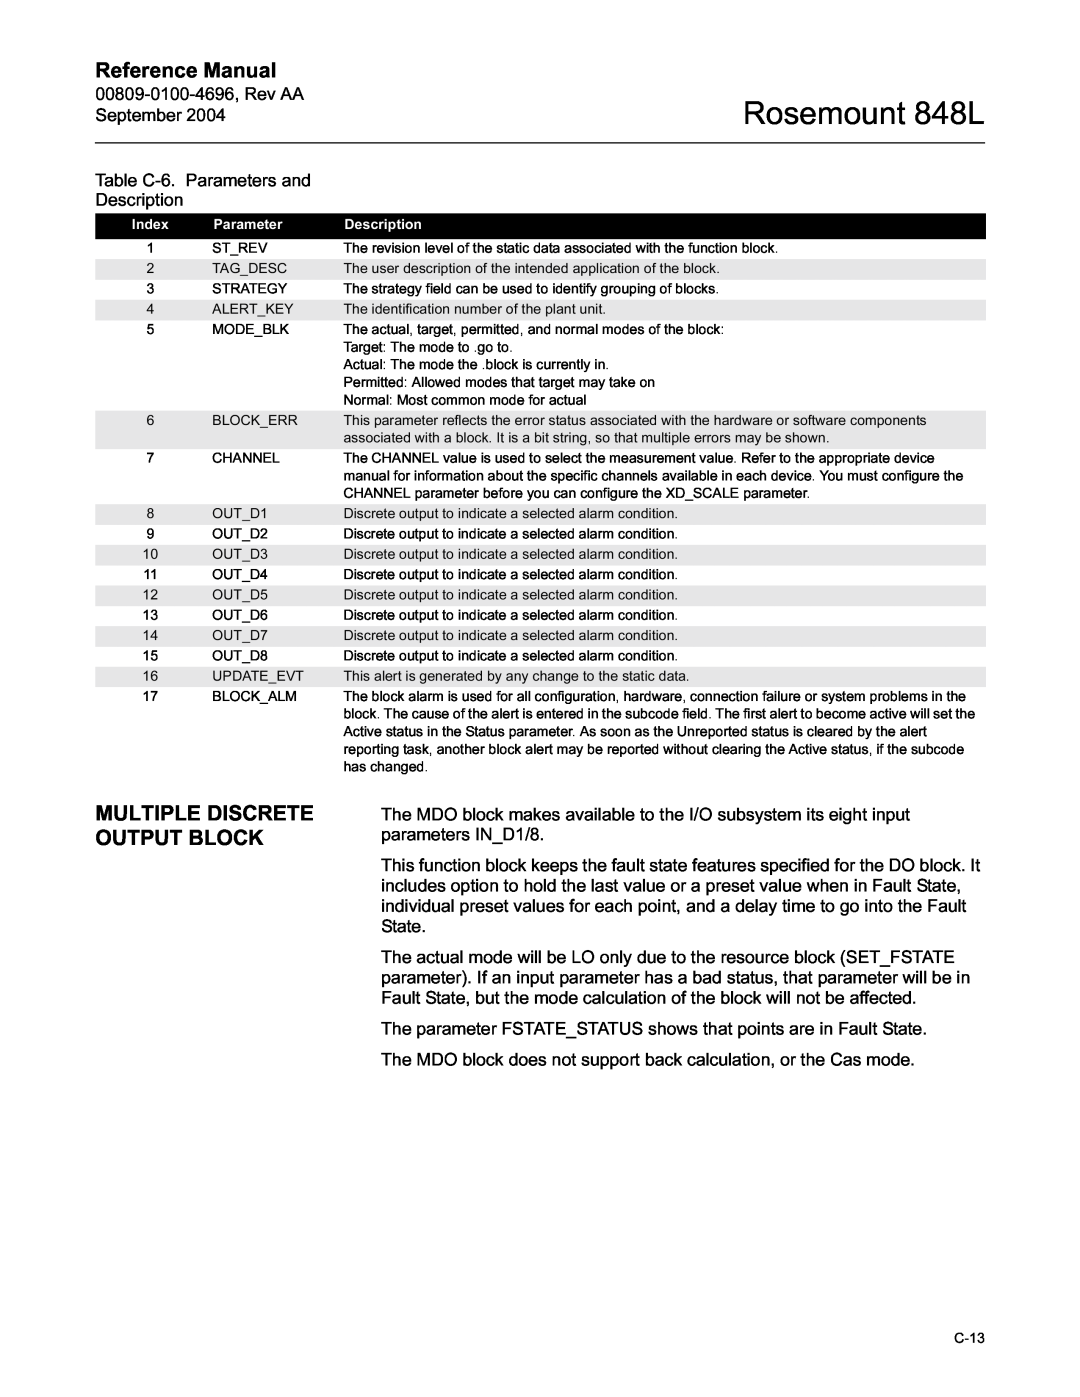 Emerson manual Rosemount 848L, Reference Manual, Multiple Discrete Output Block, 00809-0100-4696,Rev AA September 